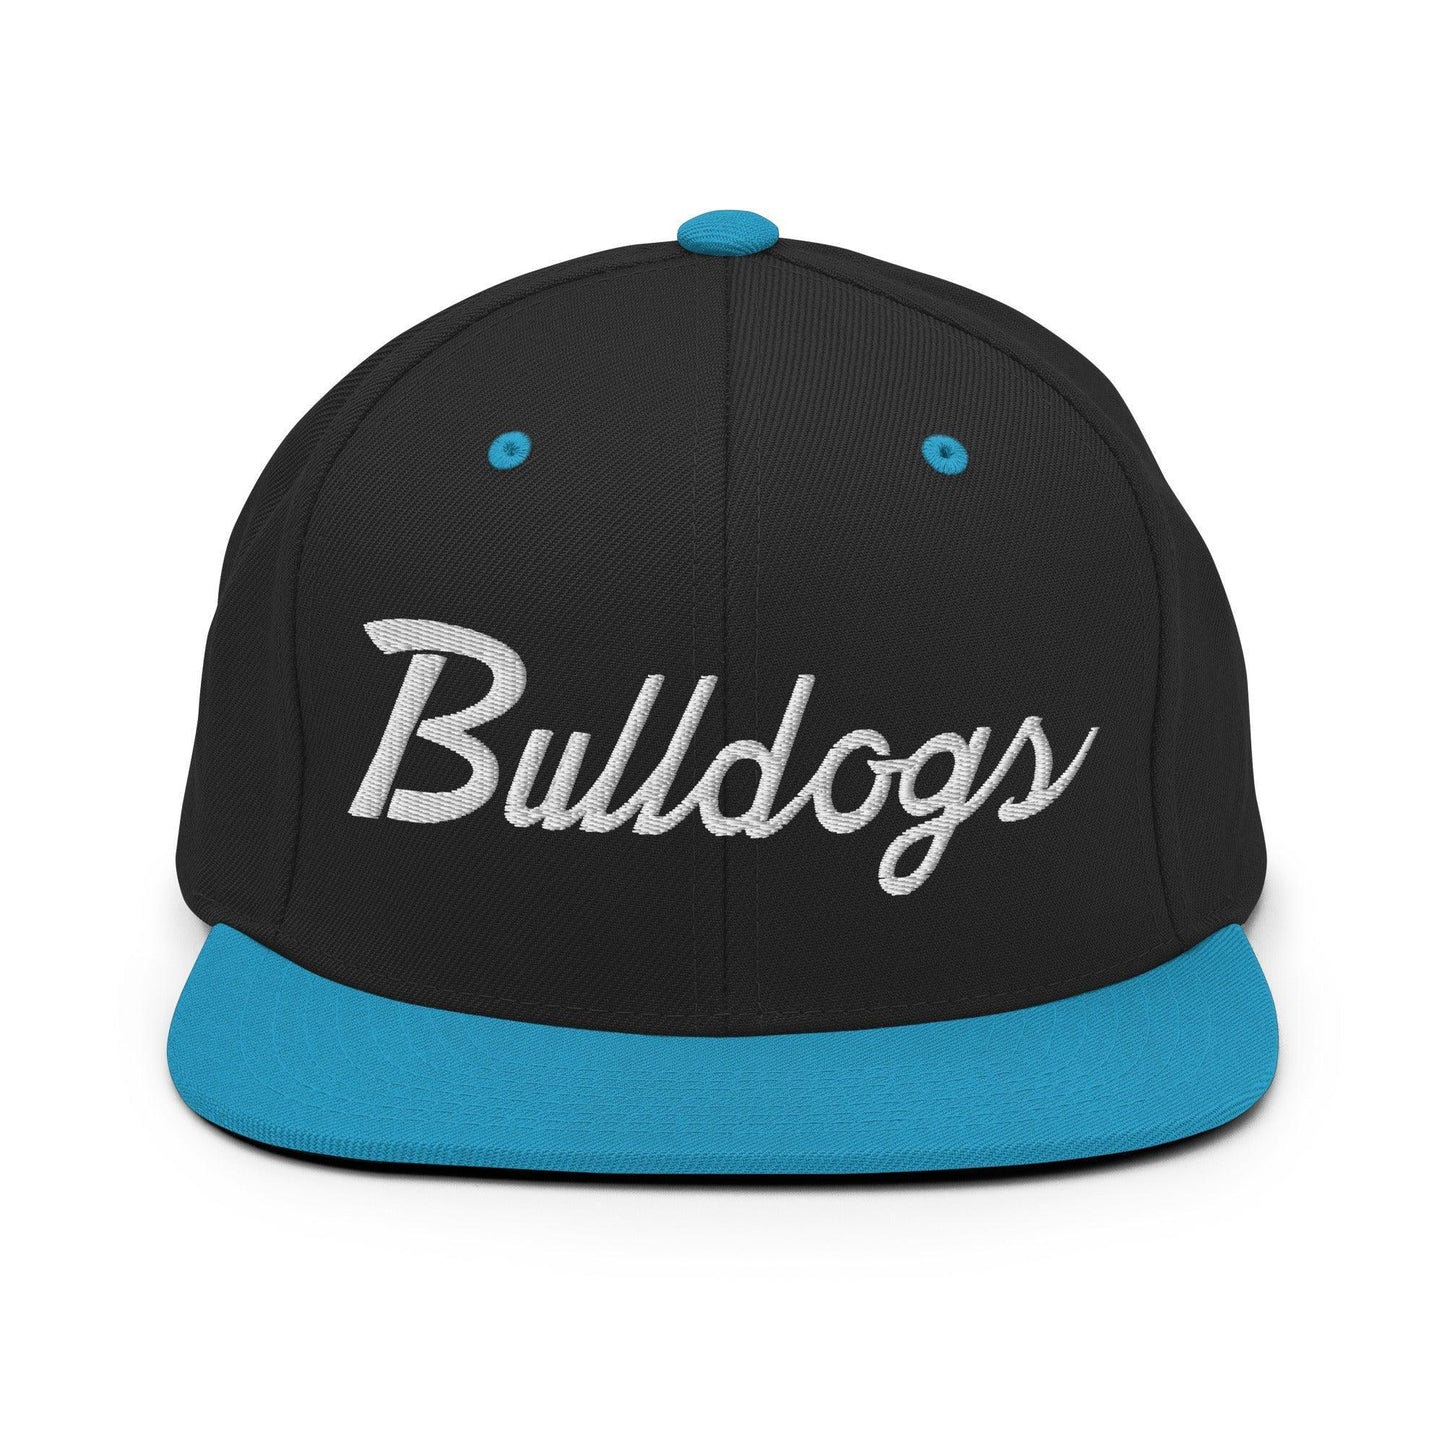 Bulldogs School Mascot Script Snapback Hat Black Teal